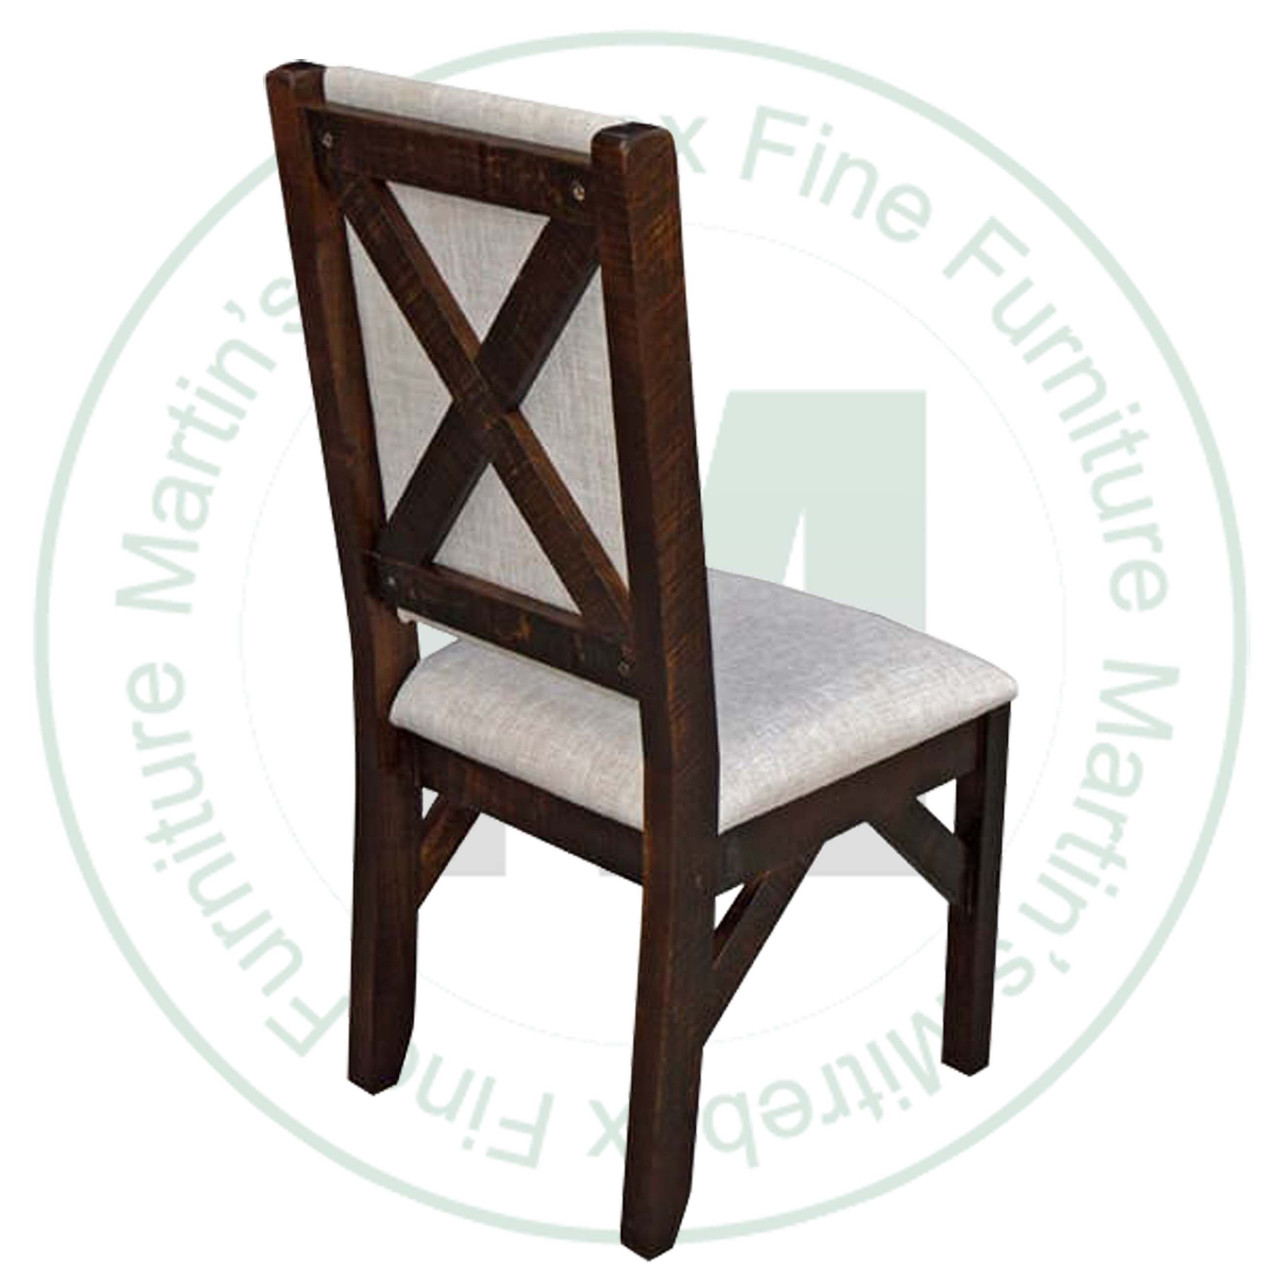 Maple Klondike Upholstered Side Chair 18'' Deep x 40'' High x 19'' Wide